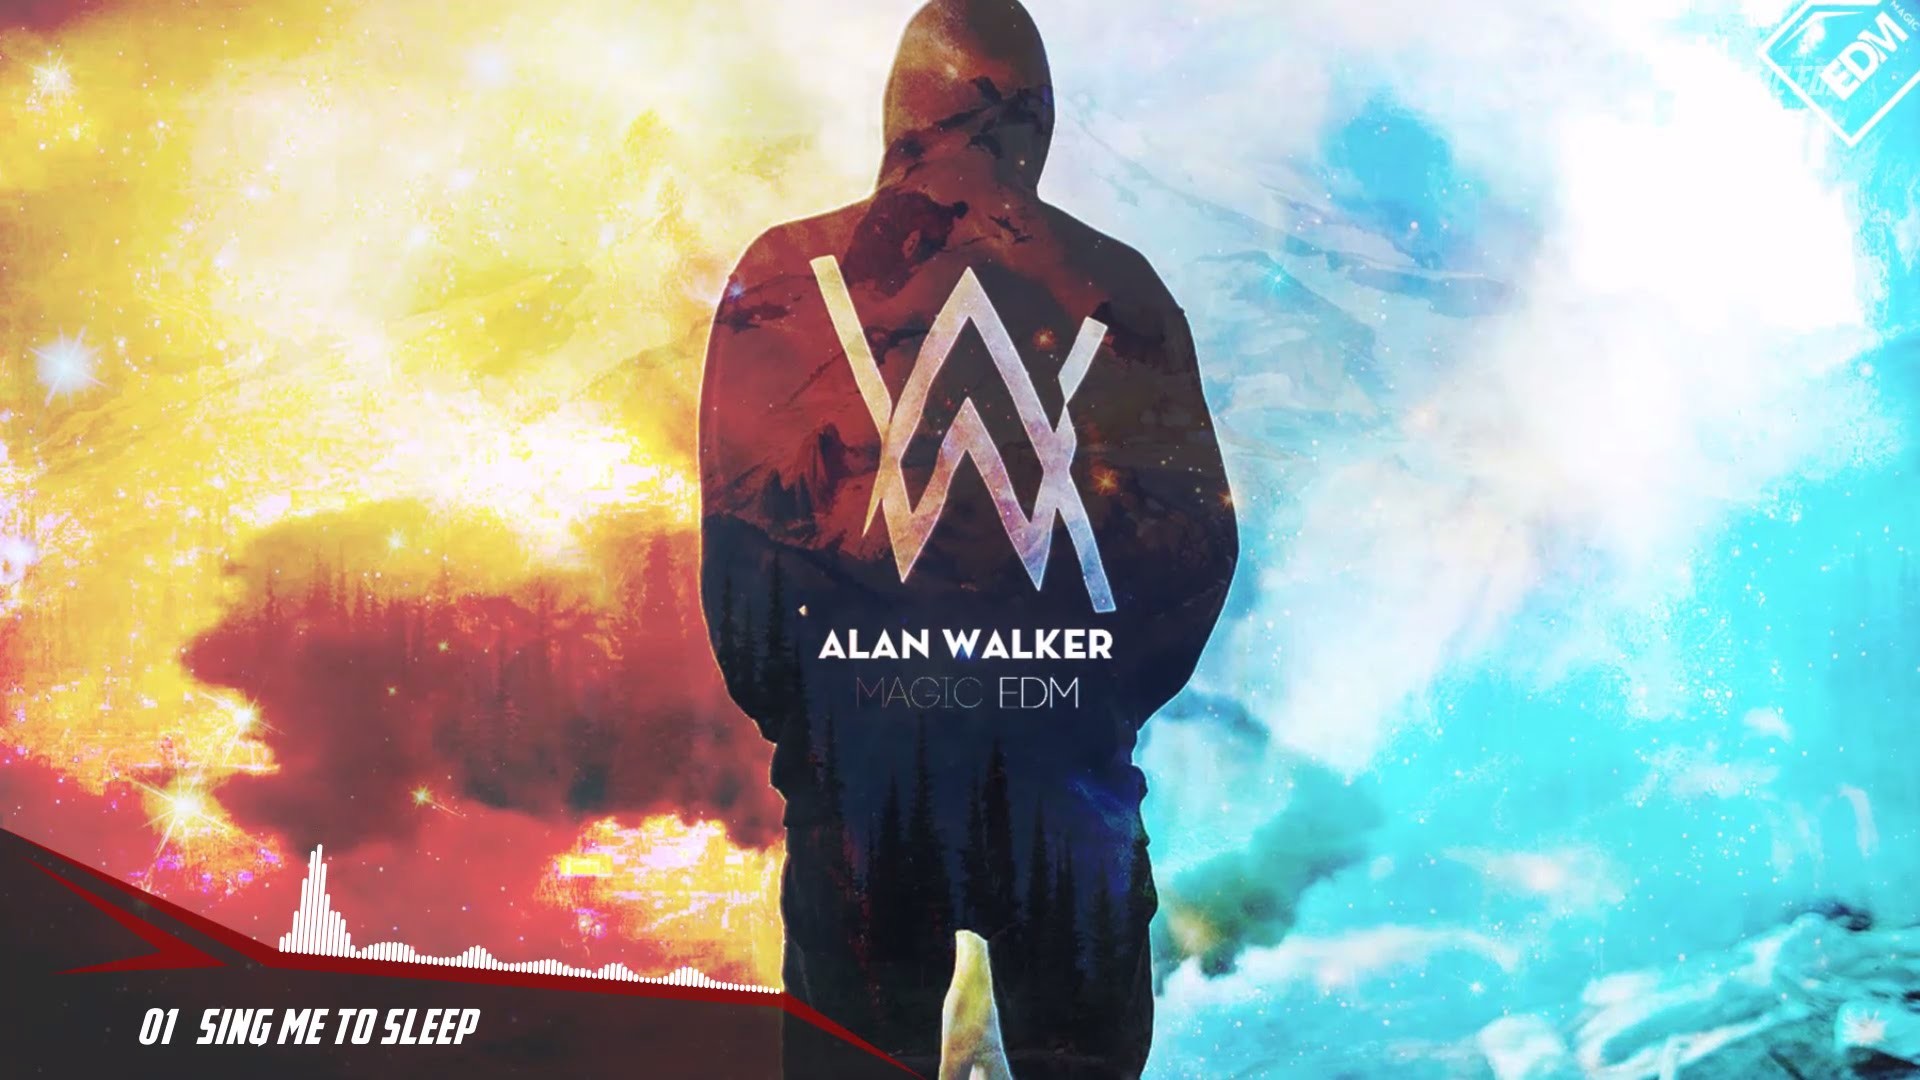 alan walker phone wallpaper,album cover,font,music,sky,performance